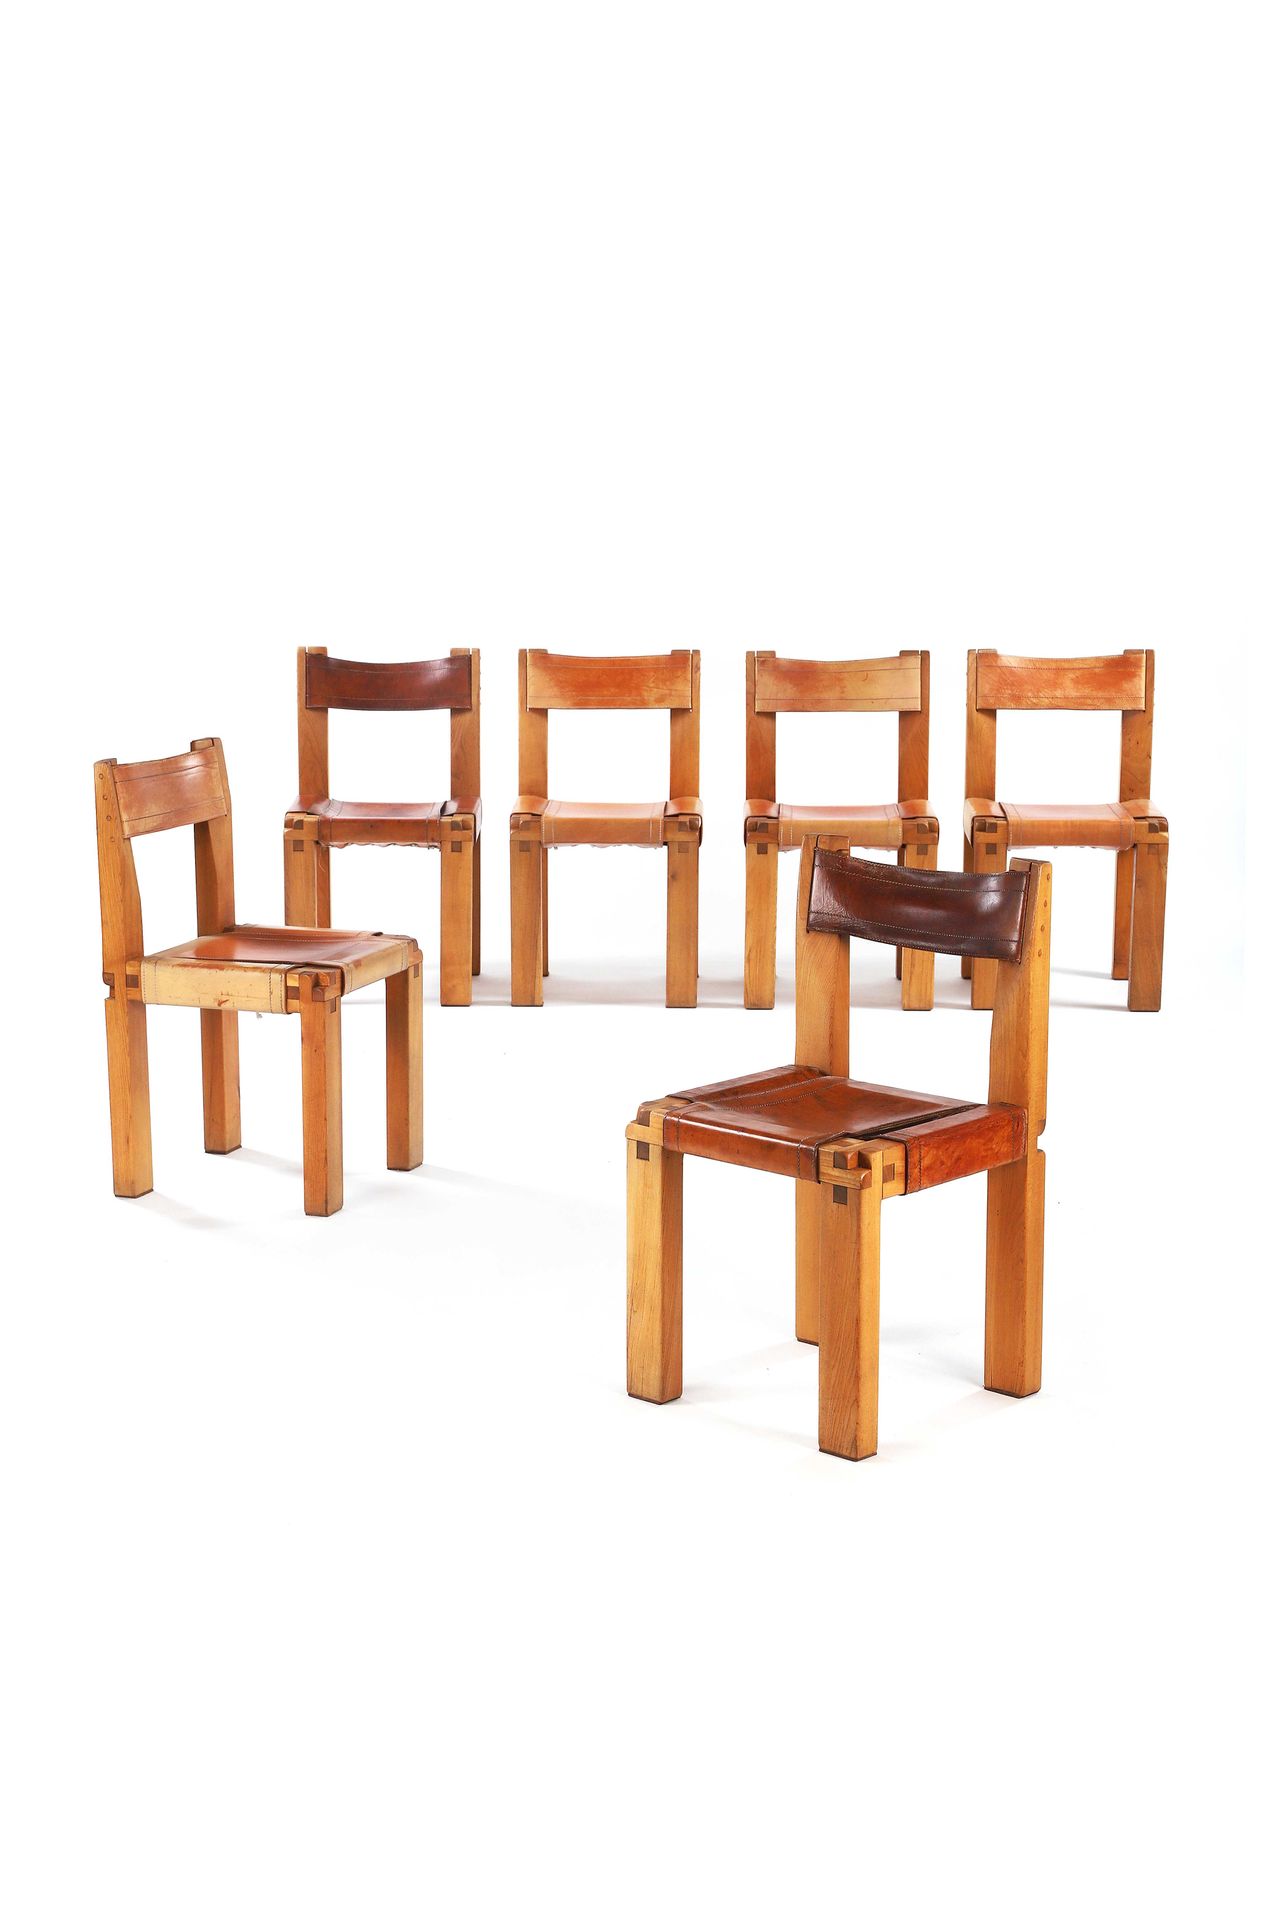 Null 皮埃尔-夏波(1927-1986)

一套6把椅子，名为S11 Orme，皮革78 x 44 x 44厘米。约1975年

一套6把椅子 榆木，皮革 &hellip;